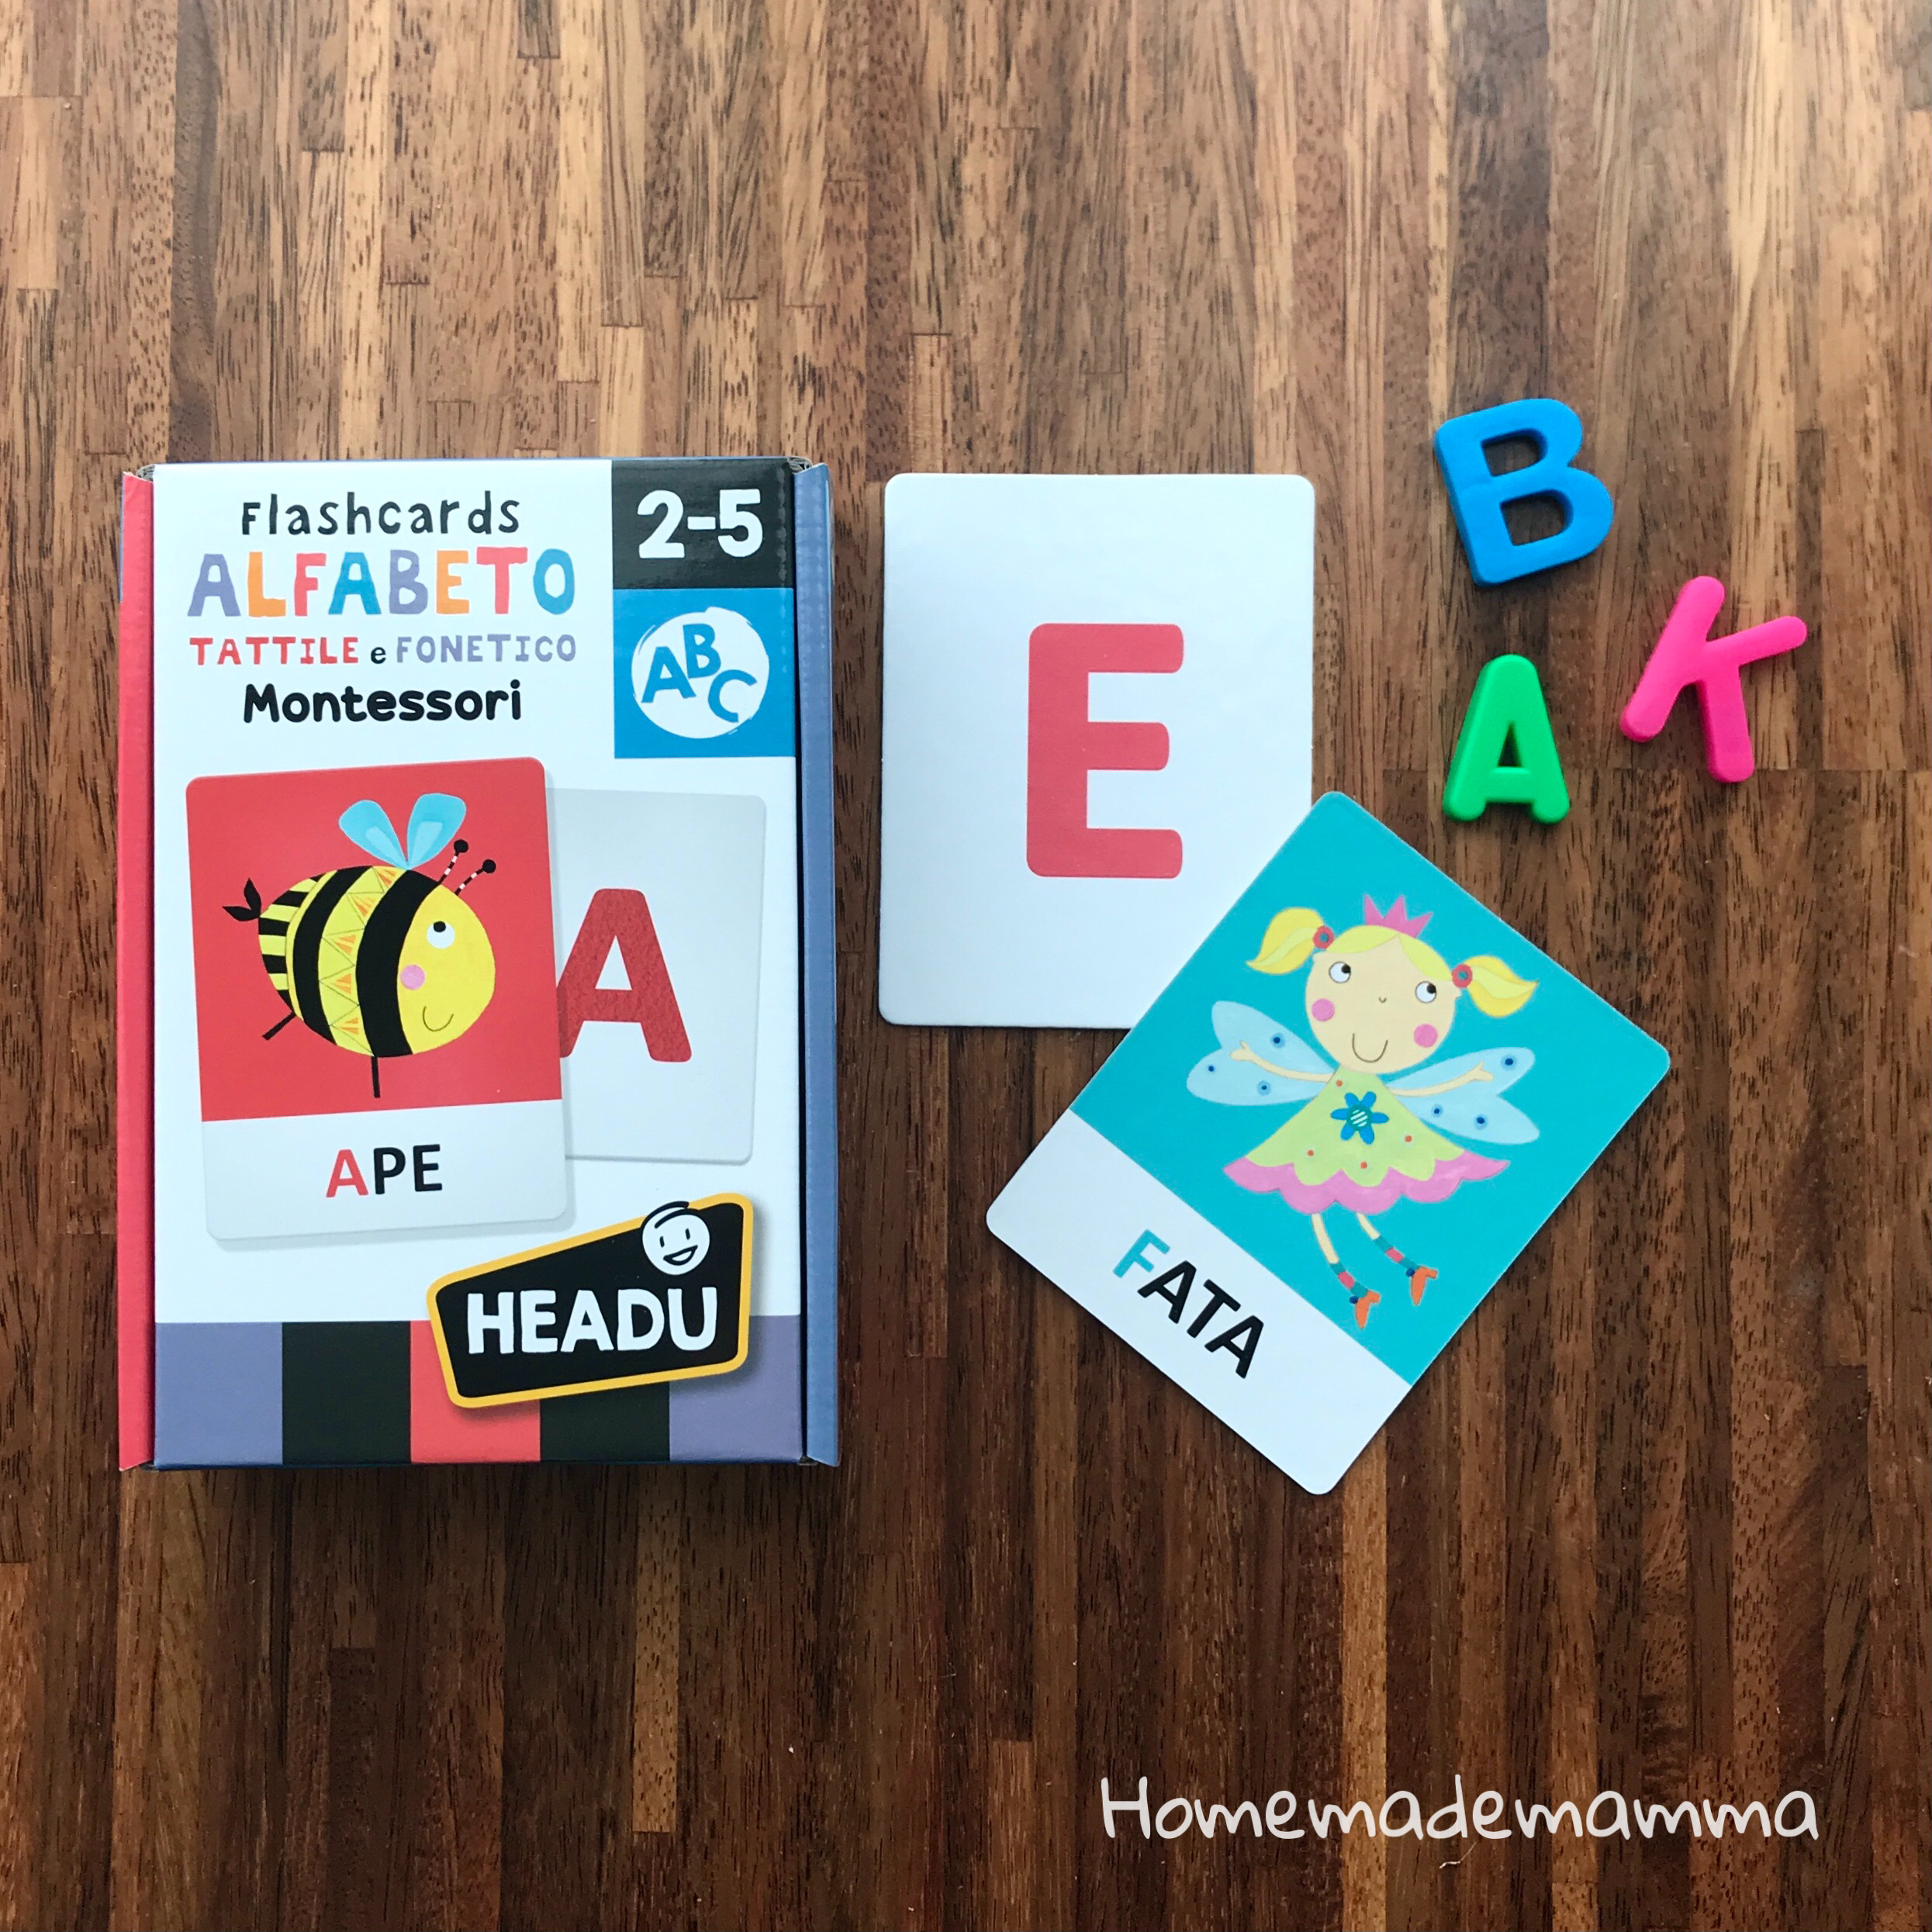 giochi headu flashcards montessori fonetiche tattili lettere